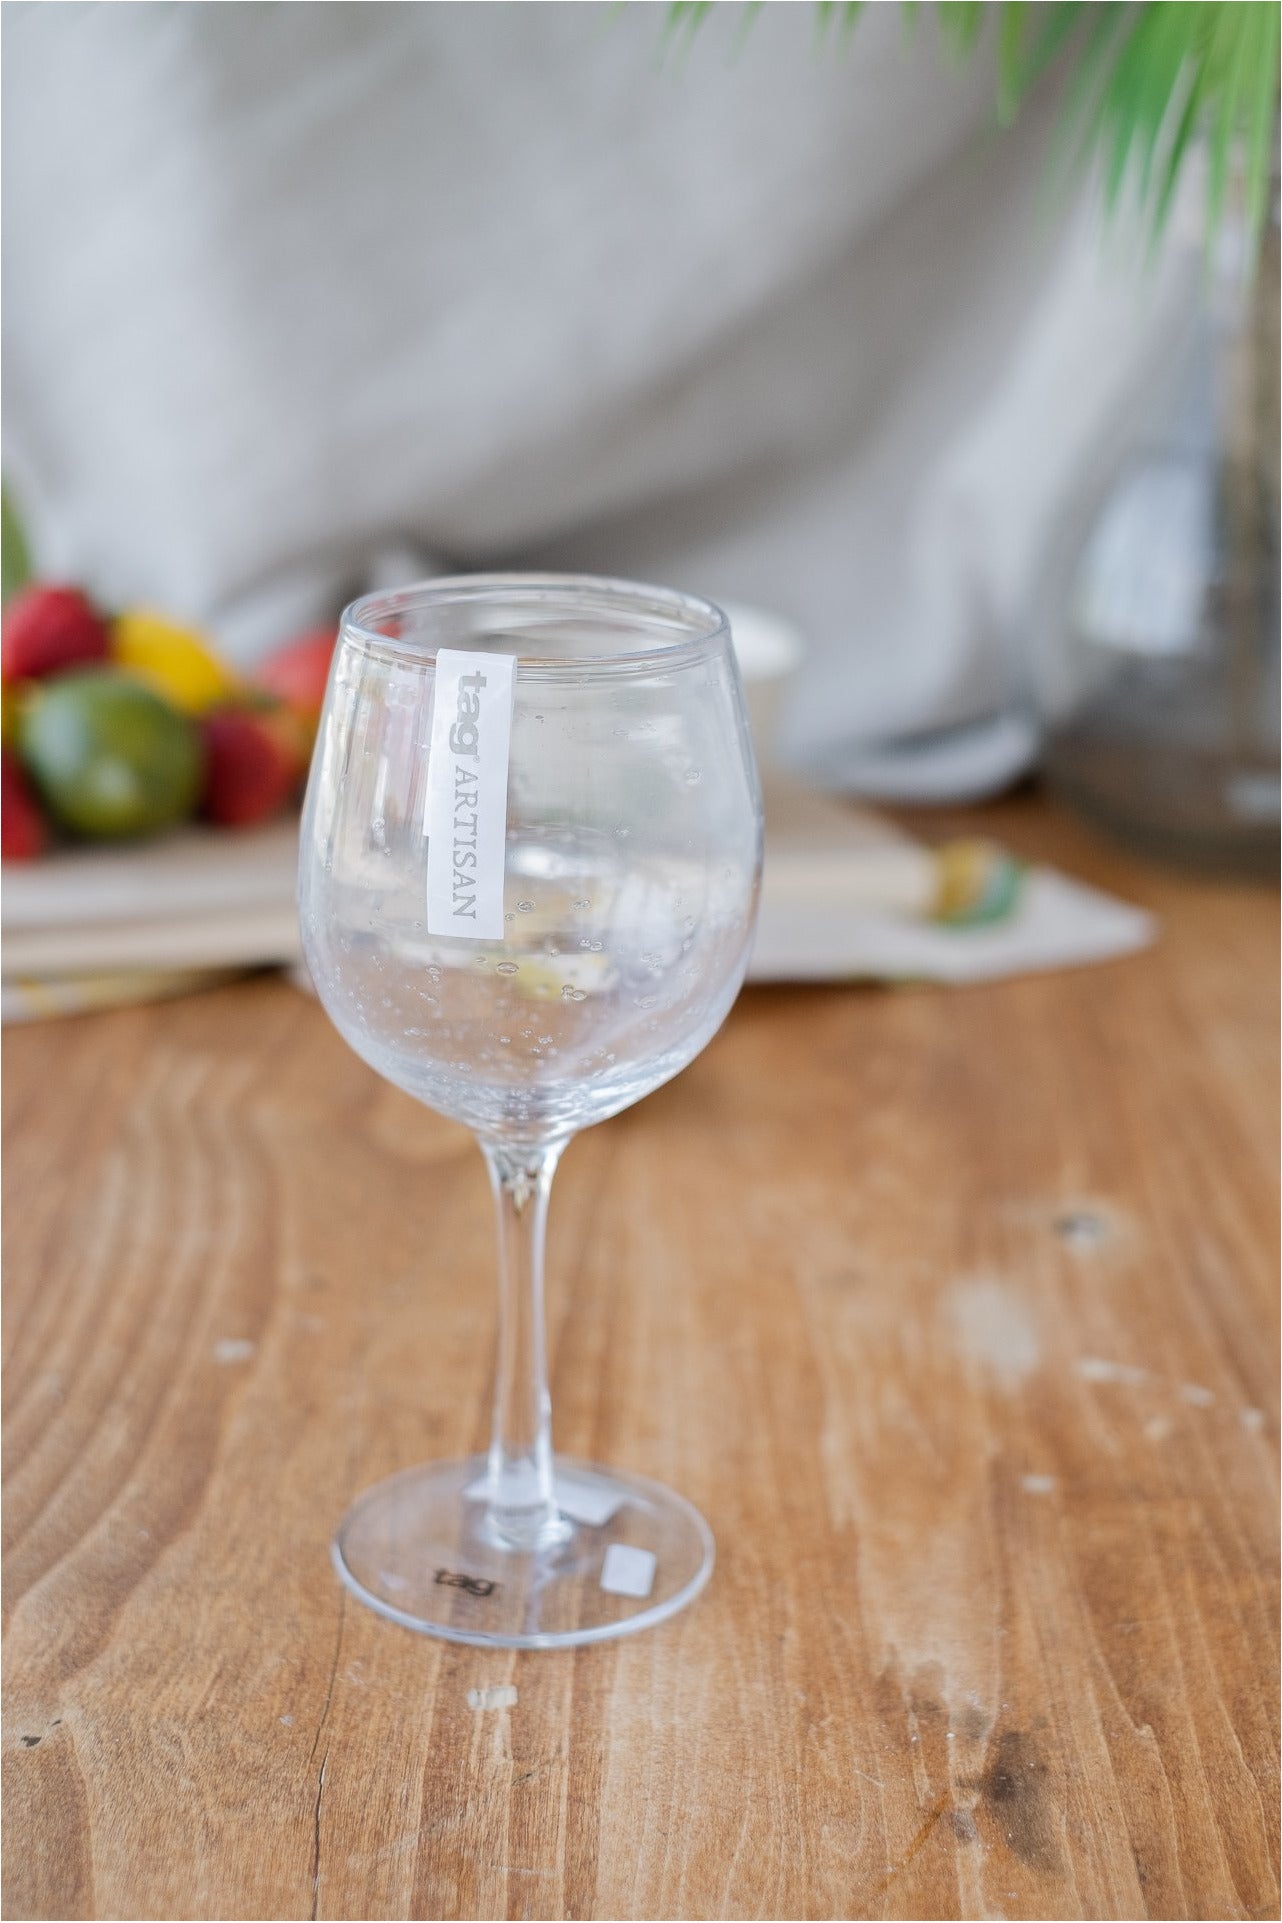 Bubble Glass Tall Wine Glass 207217